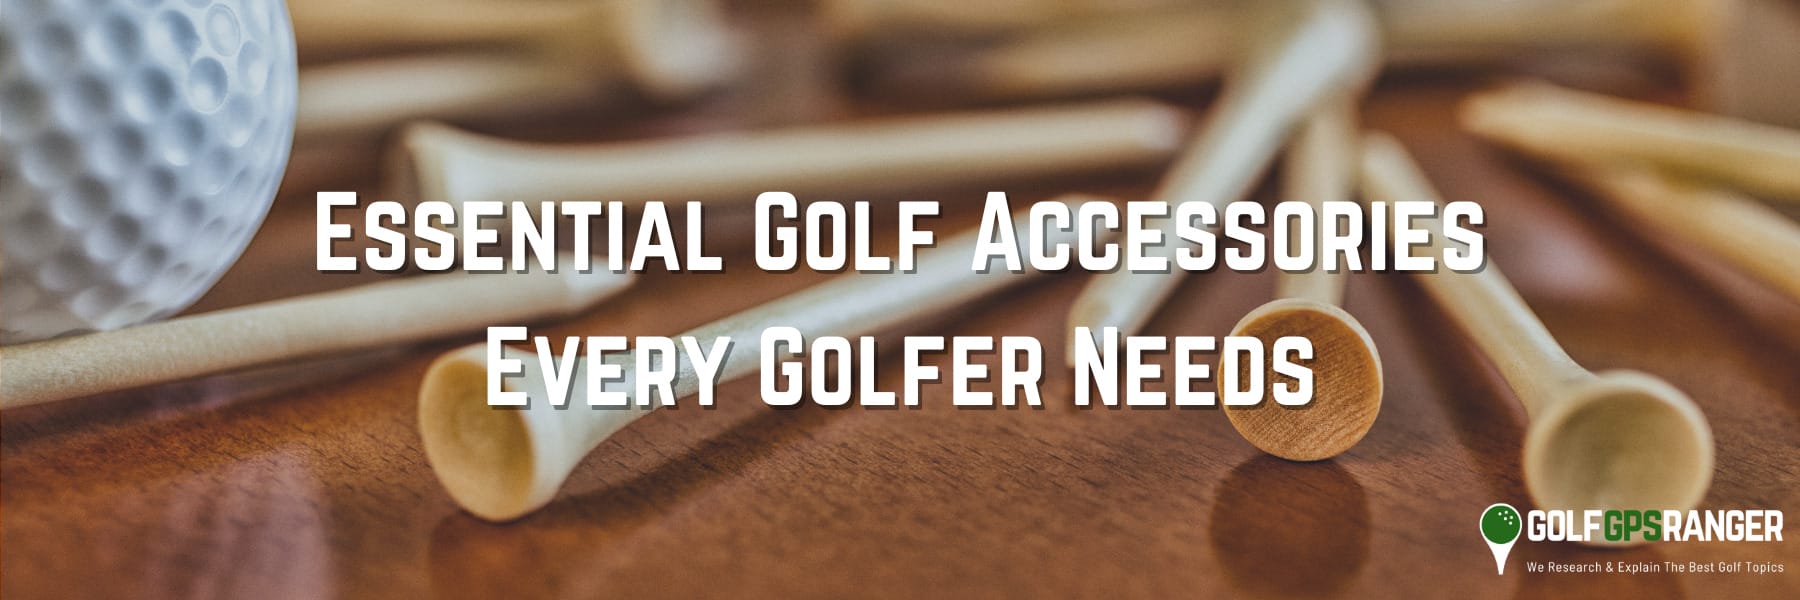 Essential-Golf-Accessories-Every-Golfer-Needs